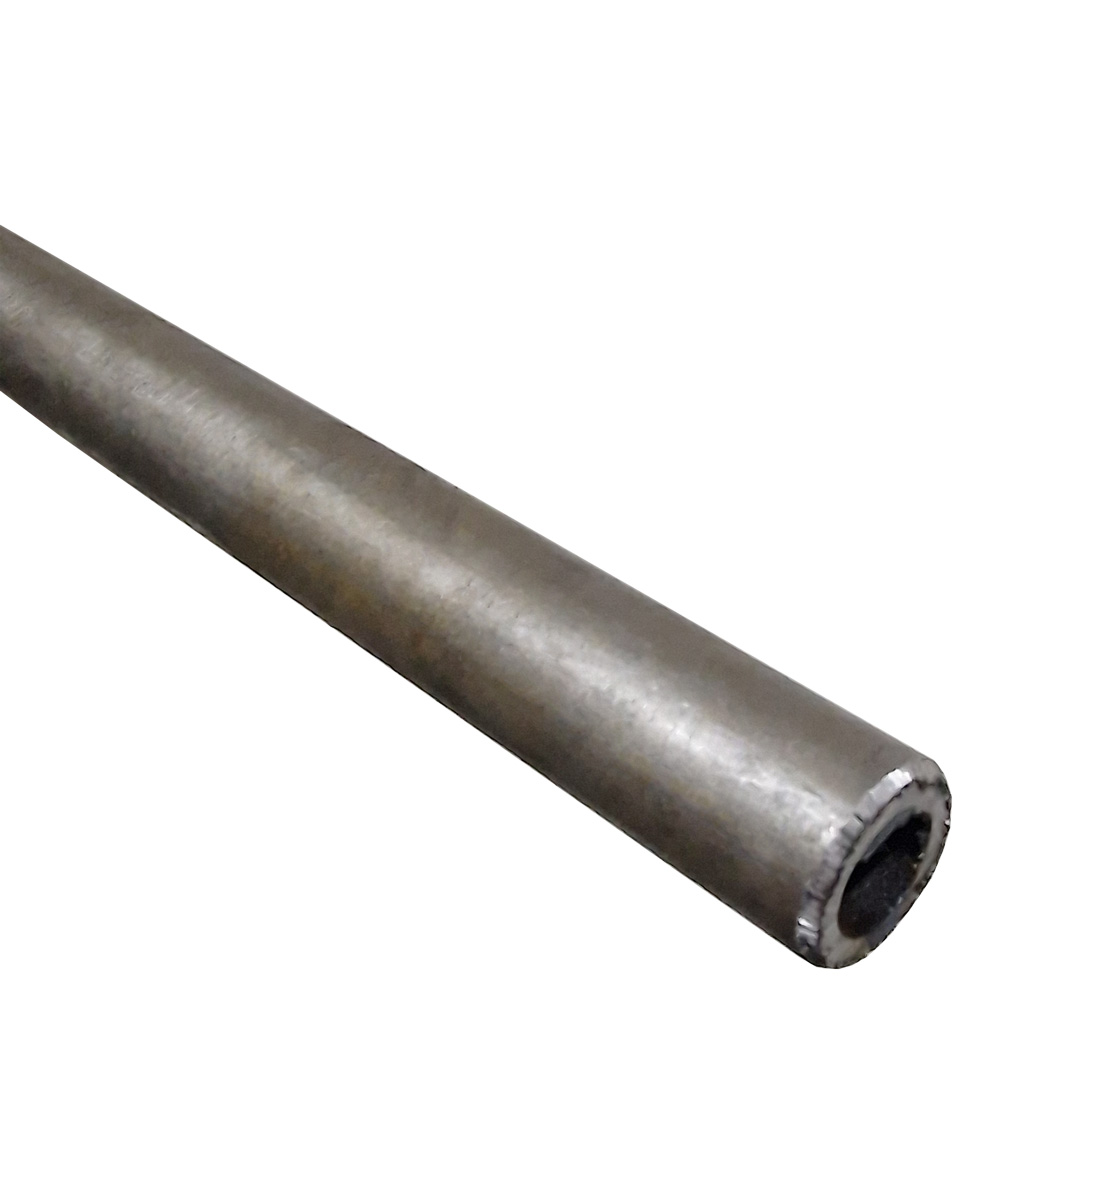 Bright Mild Steel Hollow Round bar 900mm Length - 3/4" OD